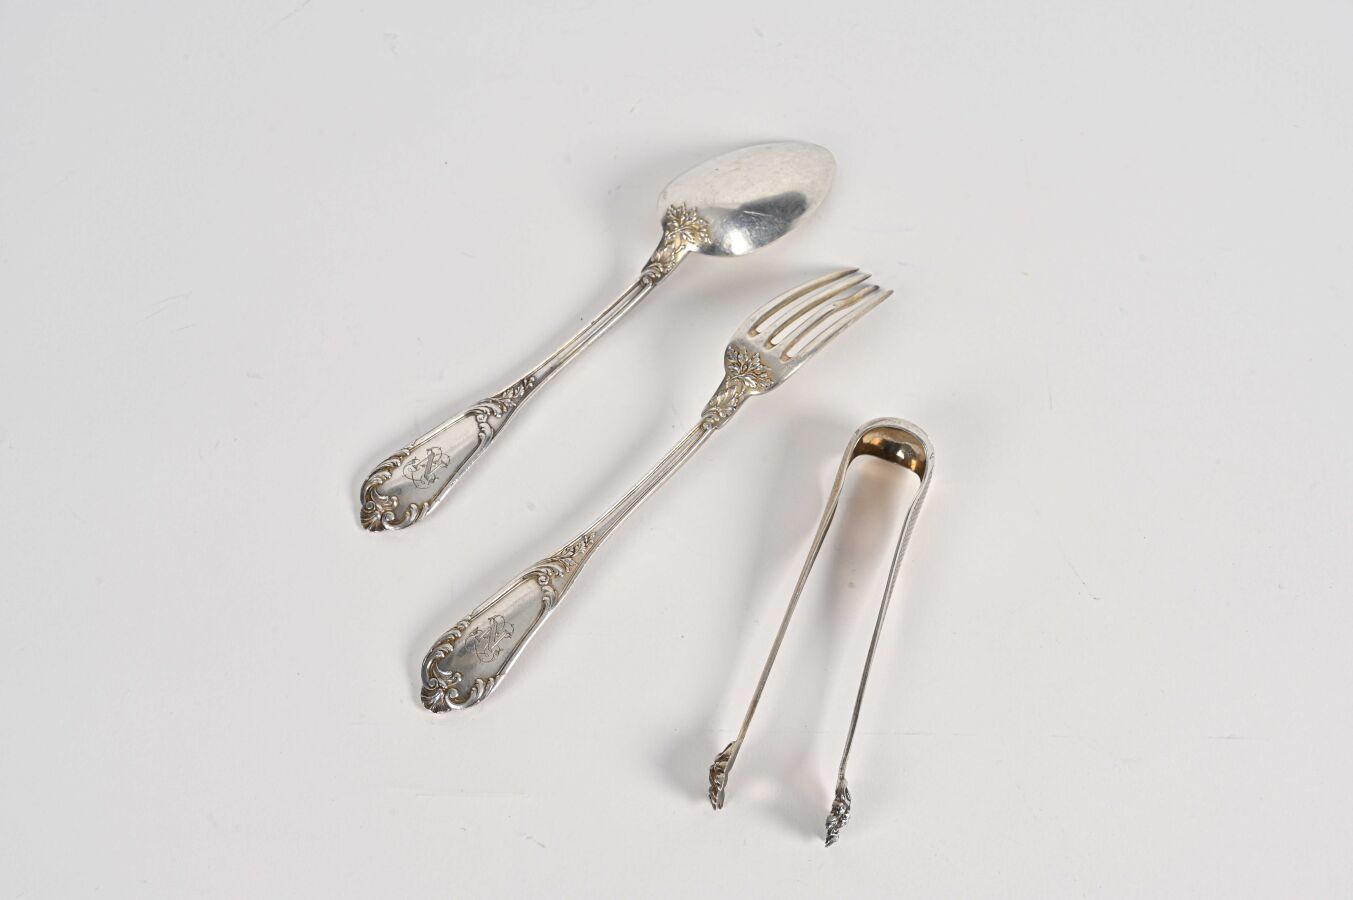 Null 一套六把银质餐匙和四把叉子，罗凯尔风格，荷兰

标记：米诺尔

大师：H S是半个太阳和一颗星星

扭曲的黑桃

接头：带戈尔迪结的糖钳，印记：Min&hellip;